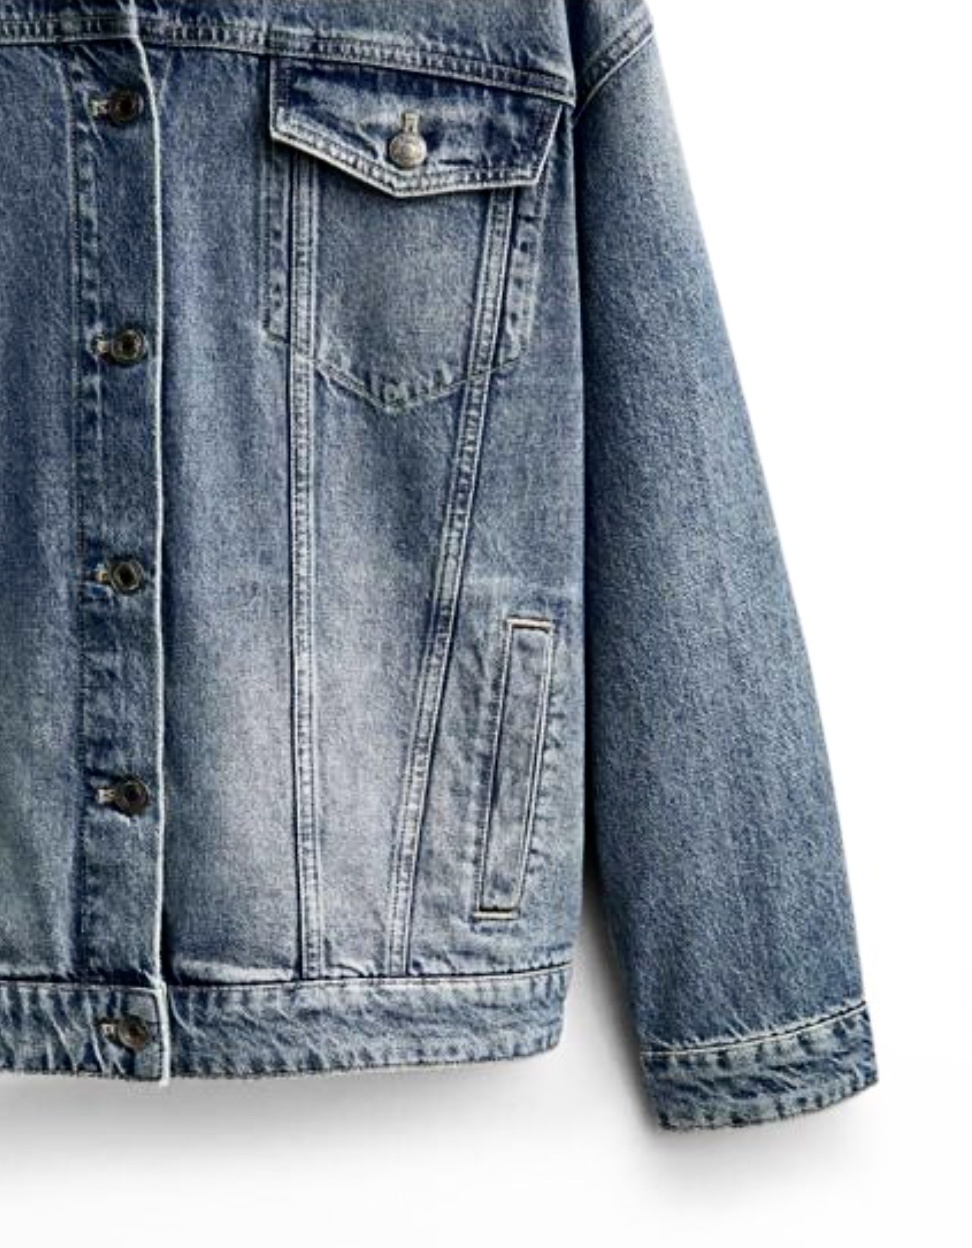 Куртка джинсовая Massimo Dutti,(M)46 размер.